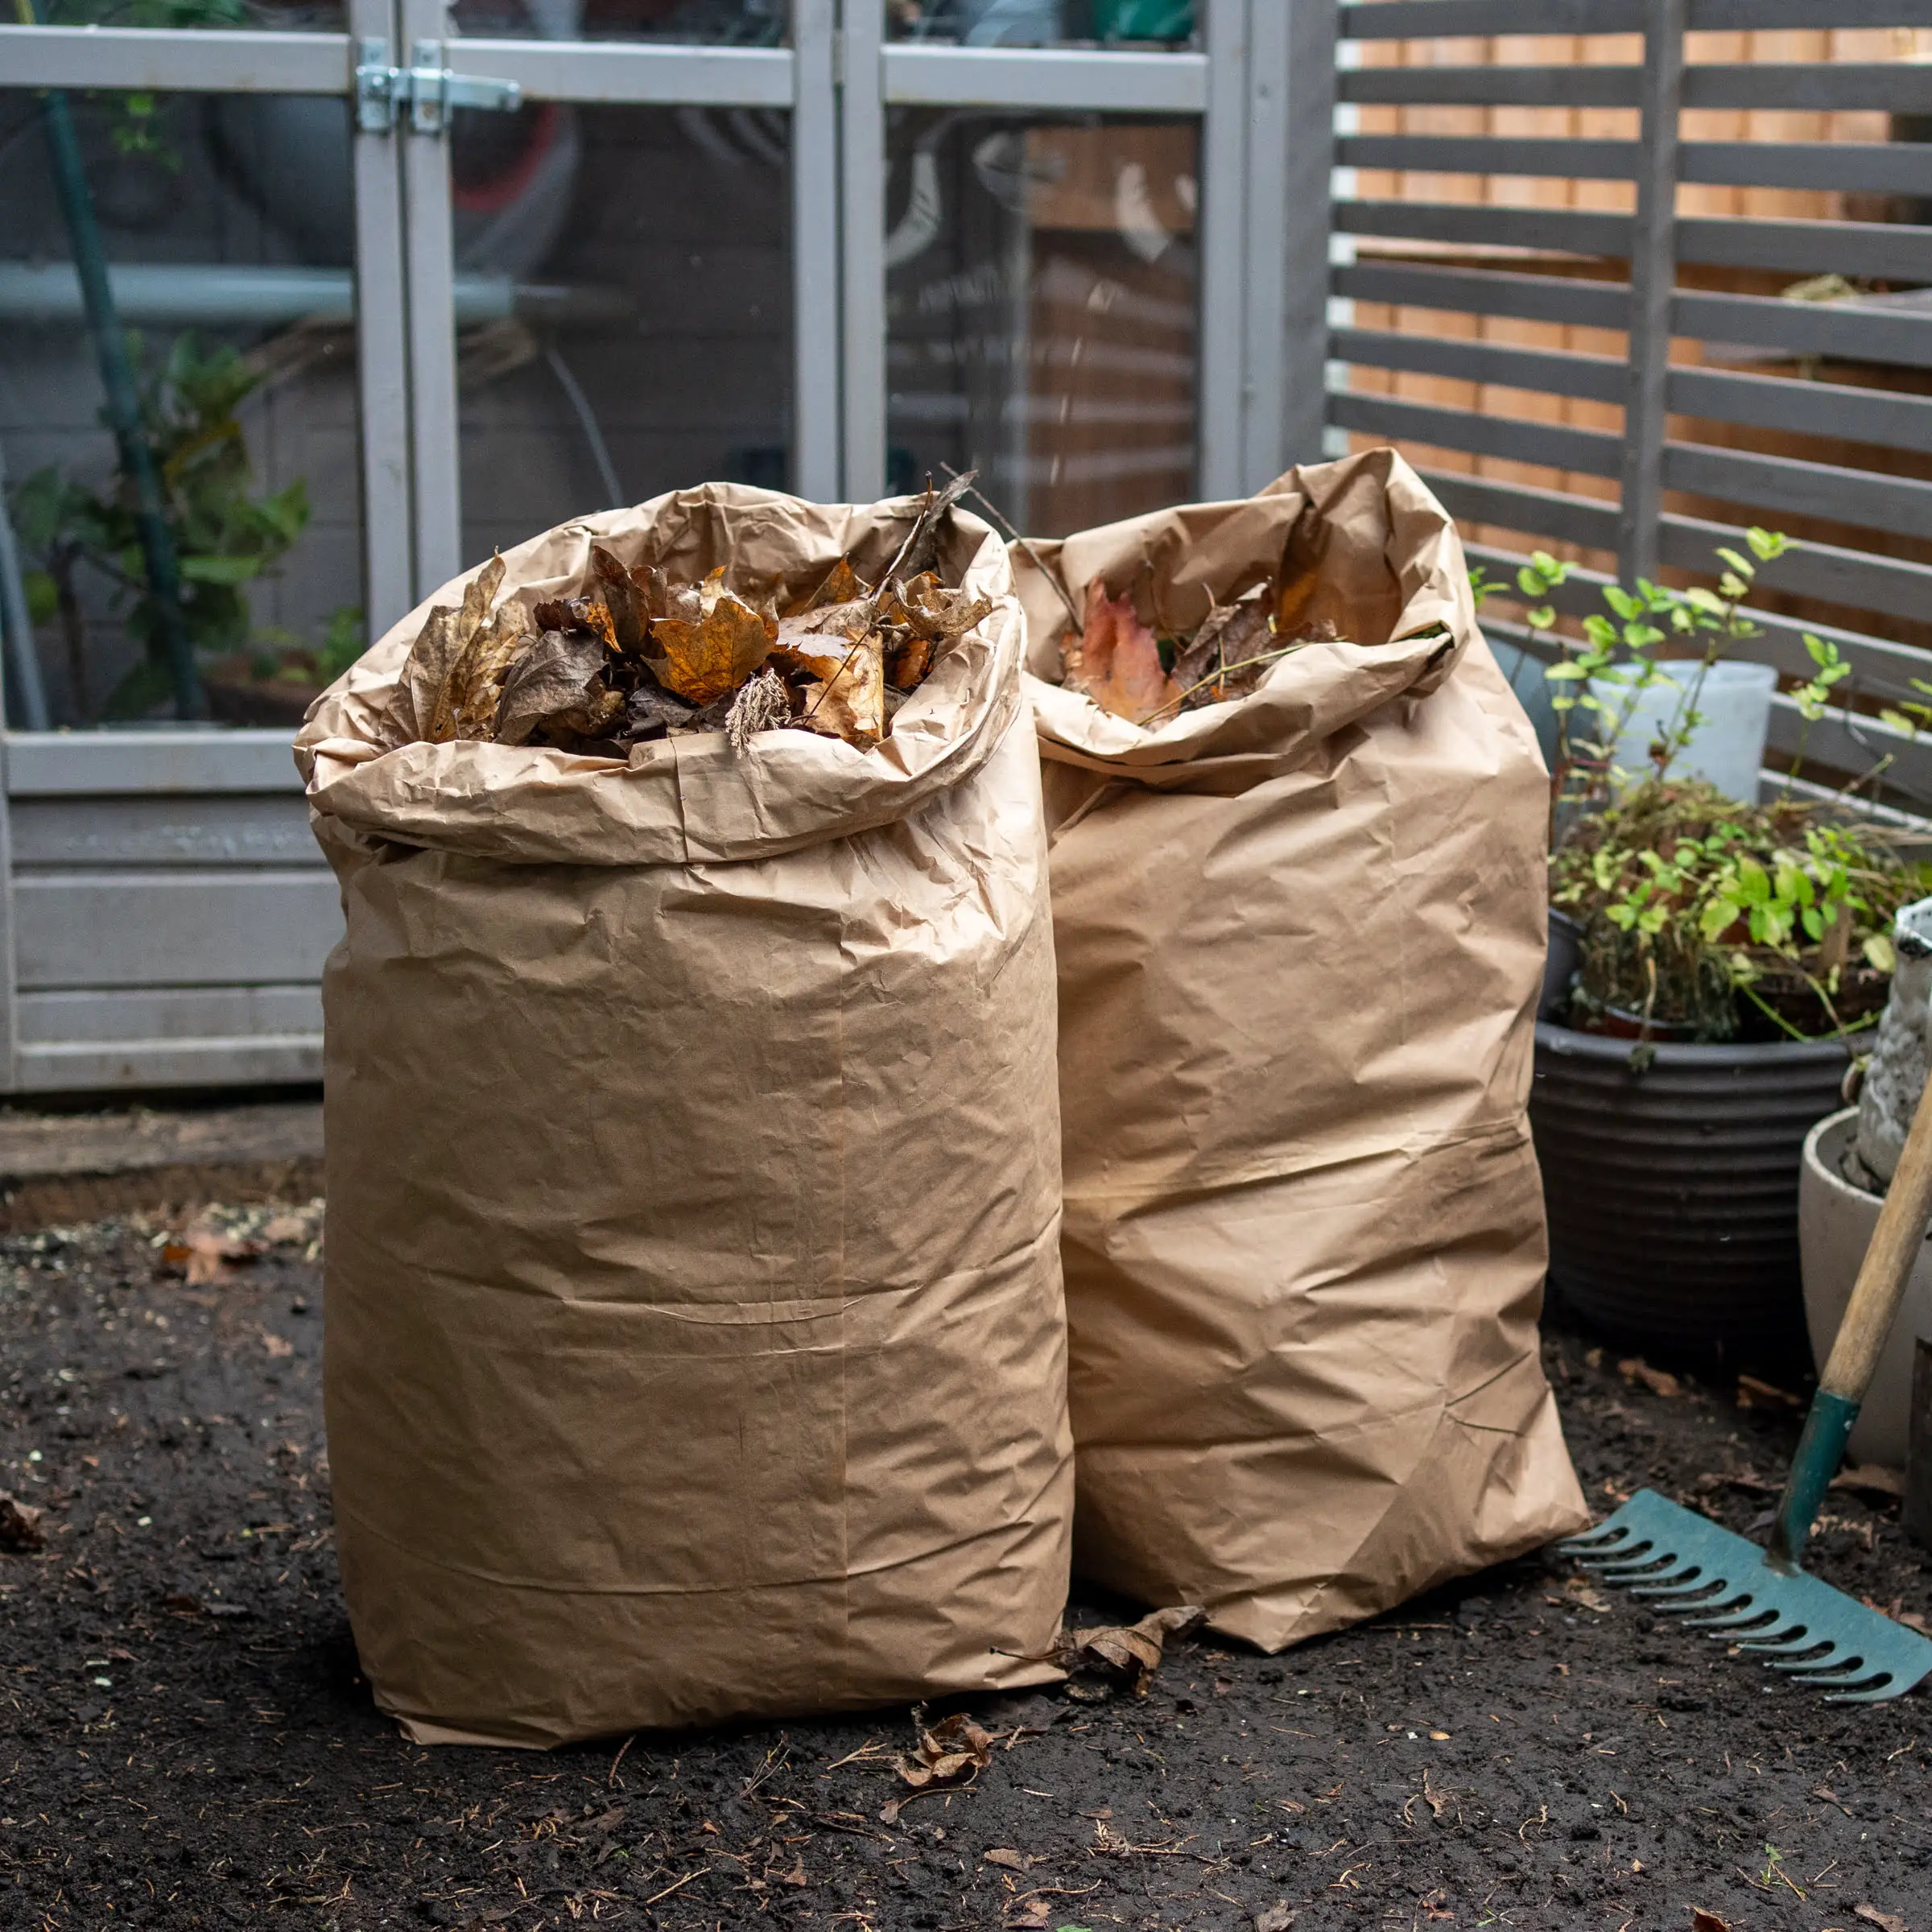 https://www.greenerlyfe.com/wp-content/uploads/2021/09/Composable-Garden-Waste-Bags.jpg